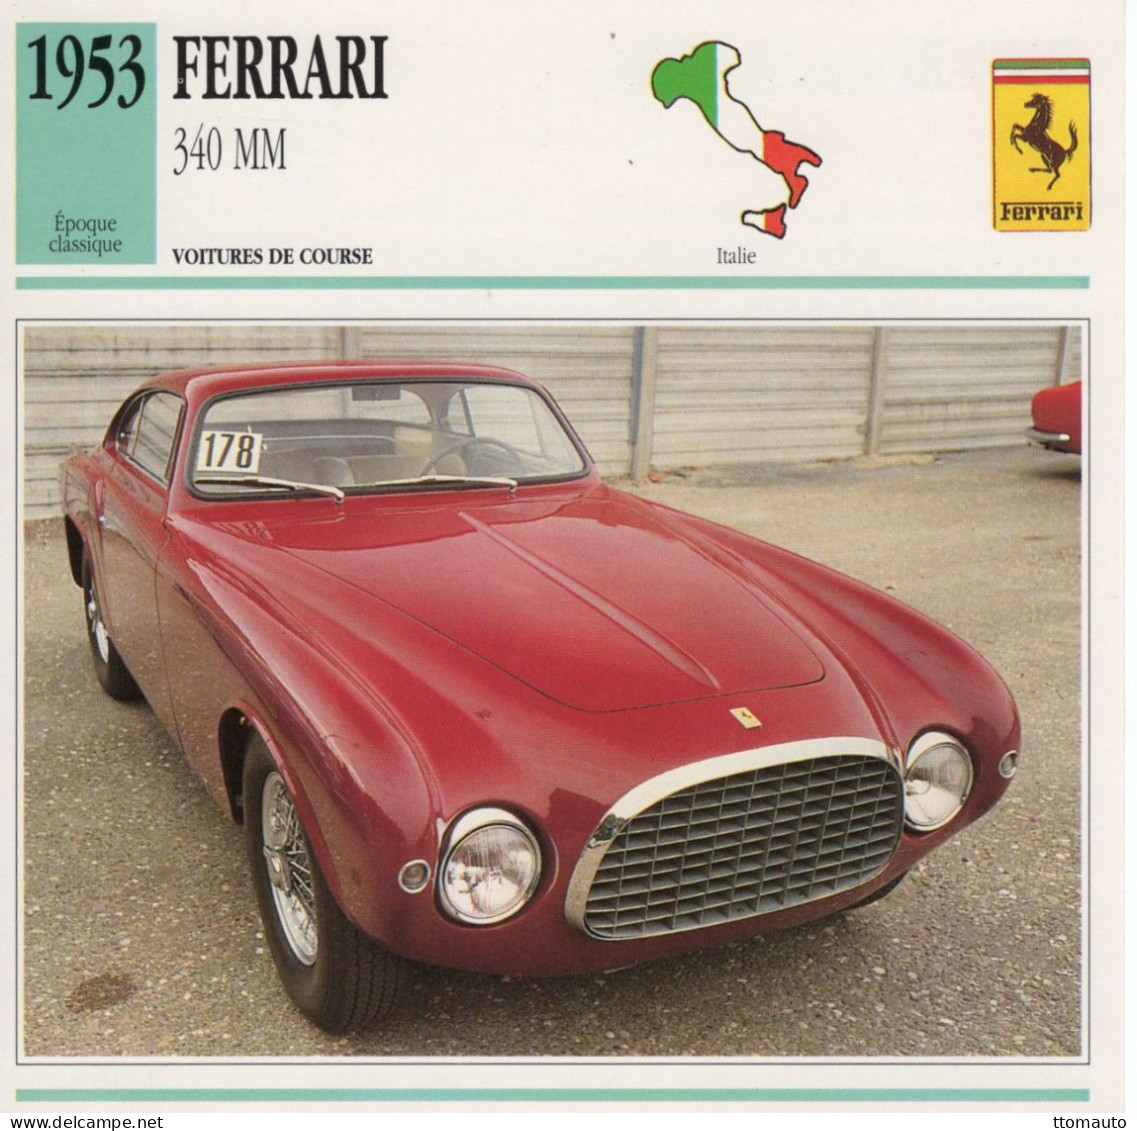 Ferrari 340 MM -  1953 - Voiture De Course -  Fiche Technique Automobile (I) - Coches